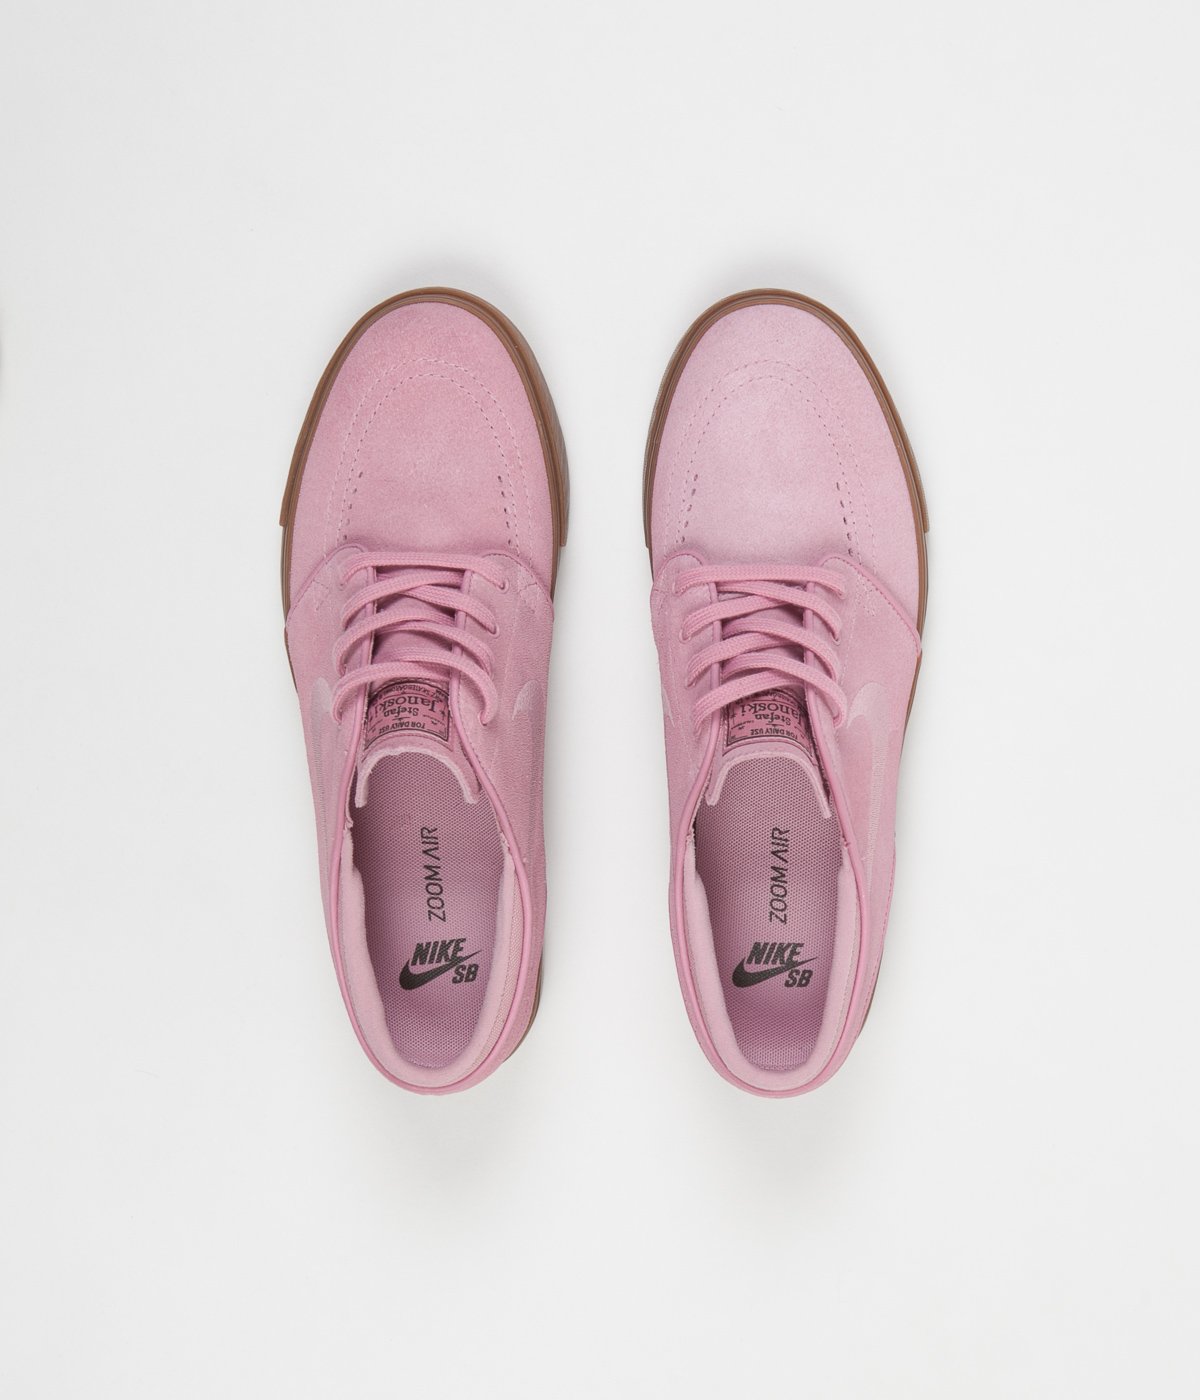 nike sb janoski grey & bubblegum pink suede skate shoes